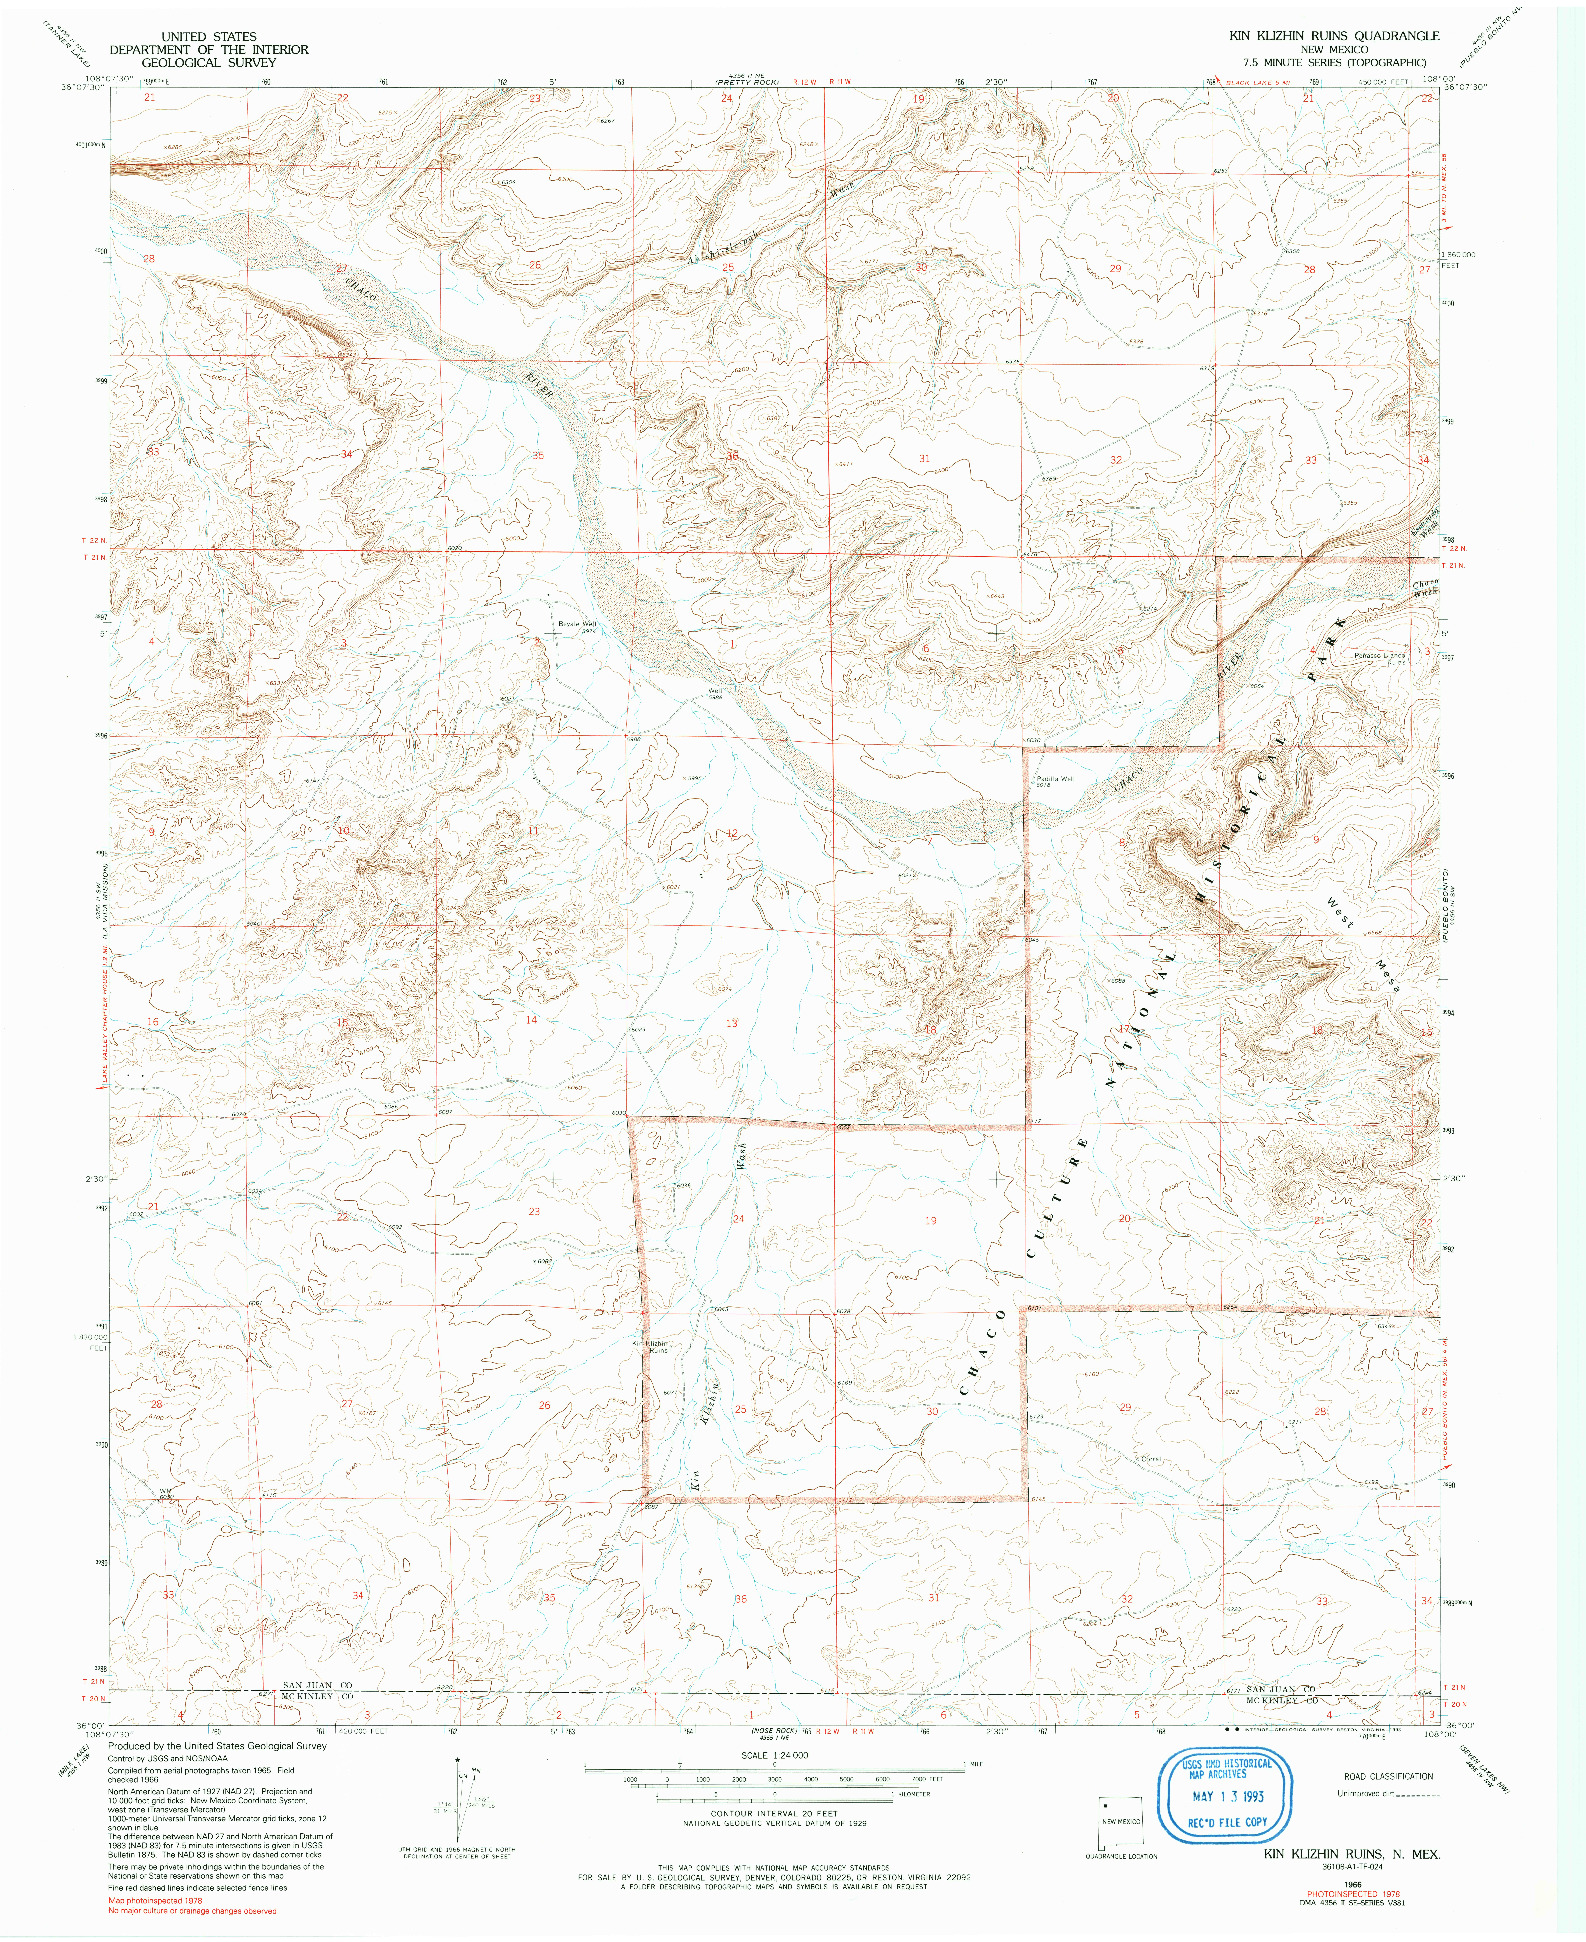 USGS 1:24000-SCALE QUADRANGLE FOR KIN KLIZHIN RUINS, NM 1966